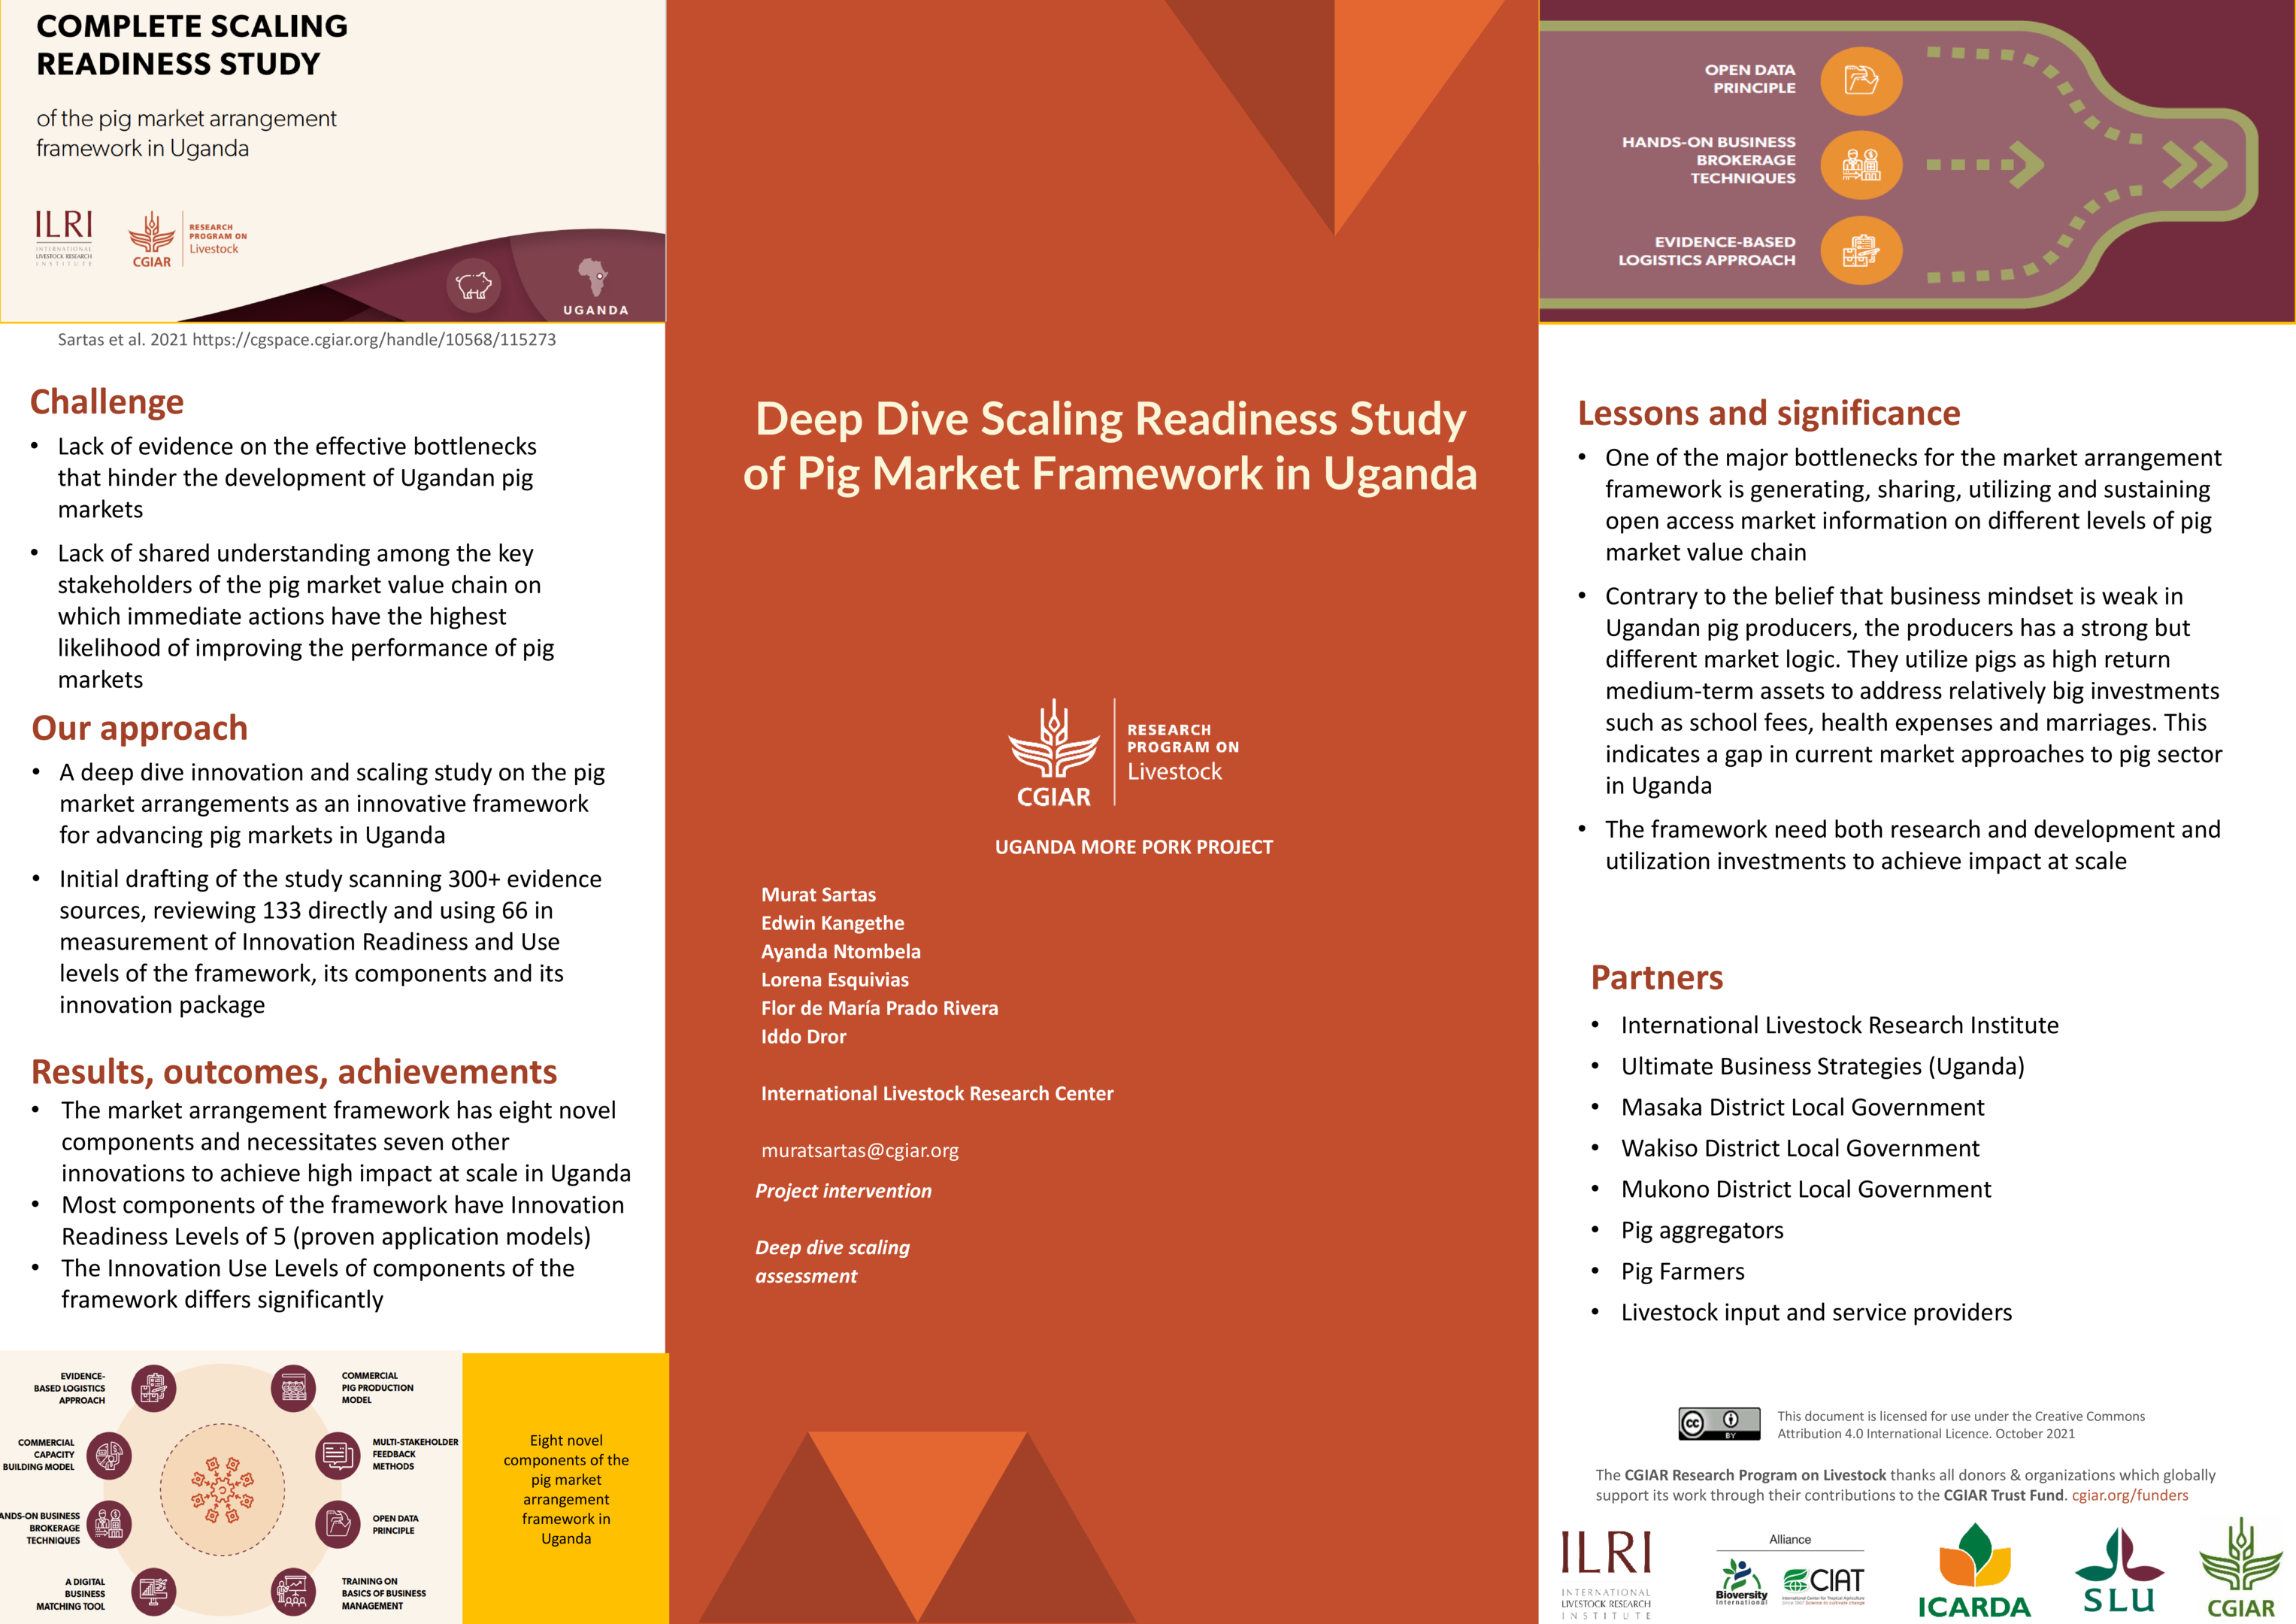 12.	Deep dive scaling readiness study of pig market framework in Uganda